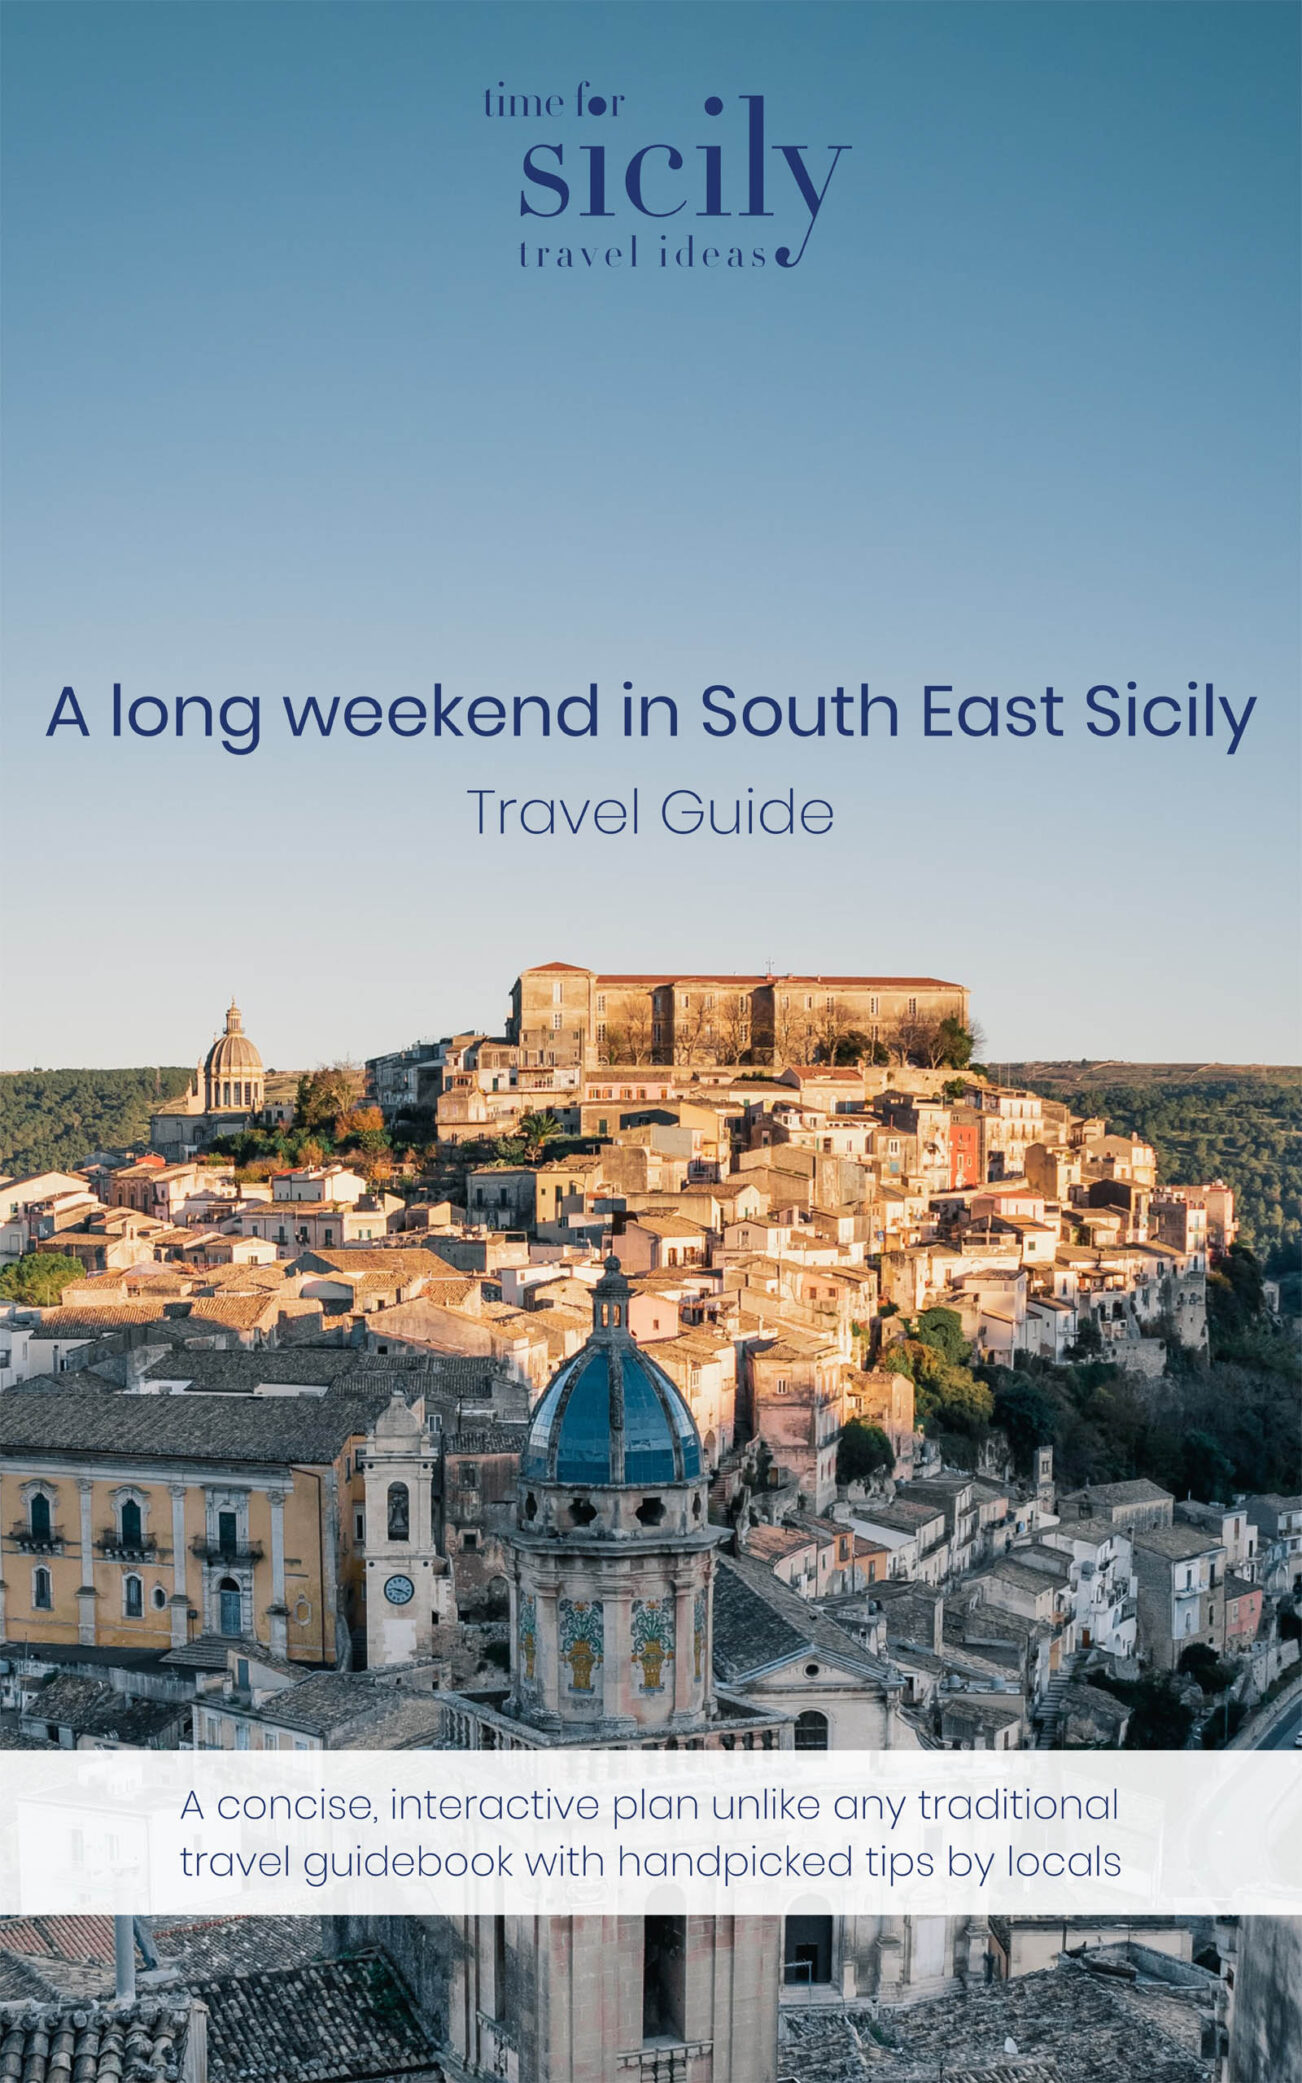 Weekend in South East Sicily ebook guide